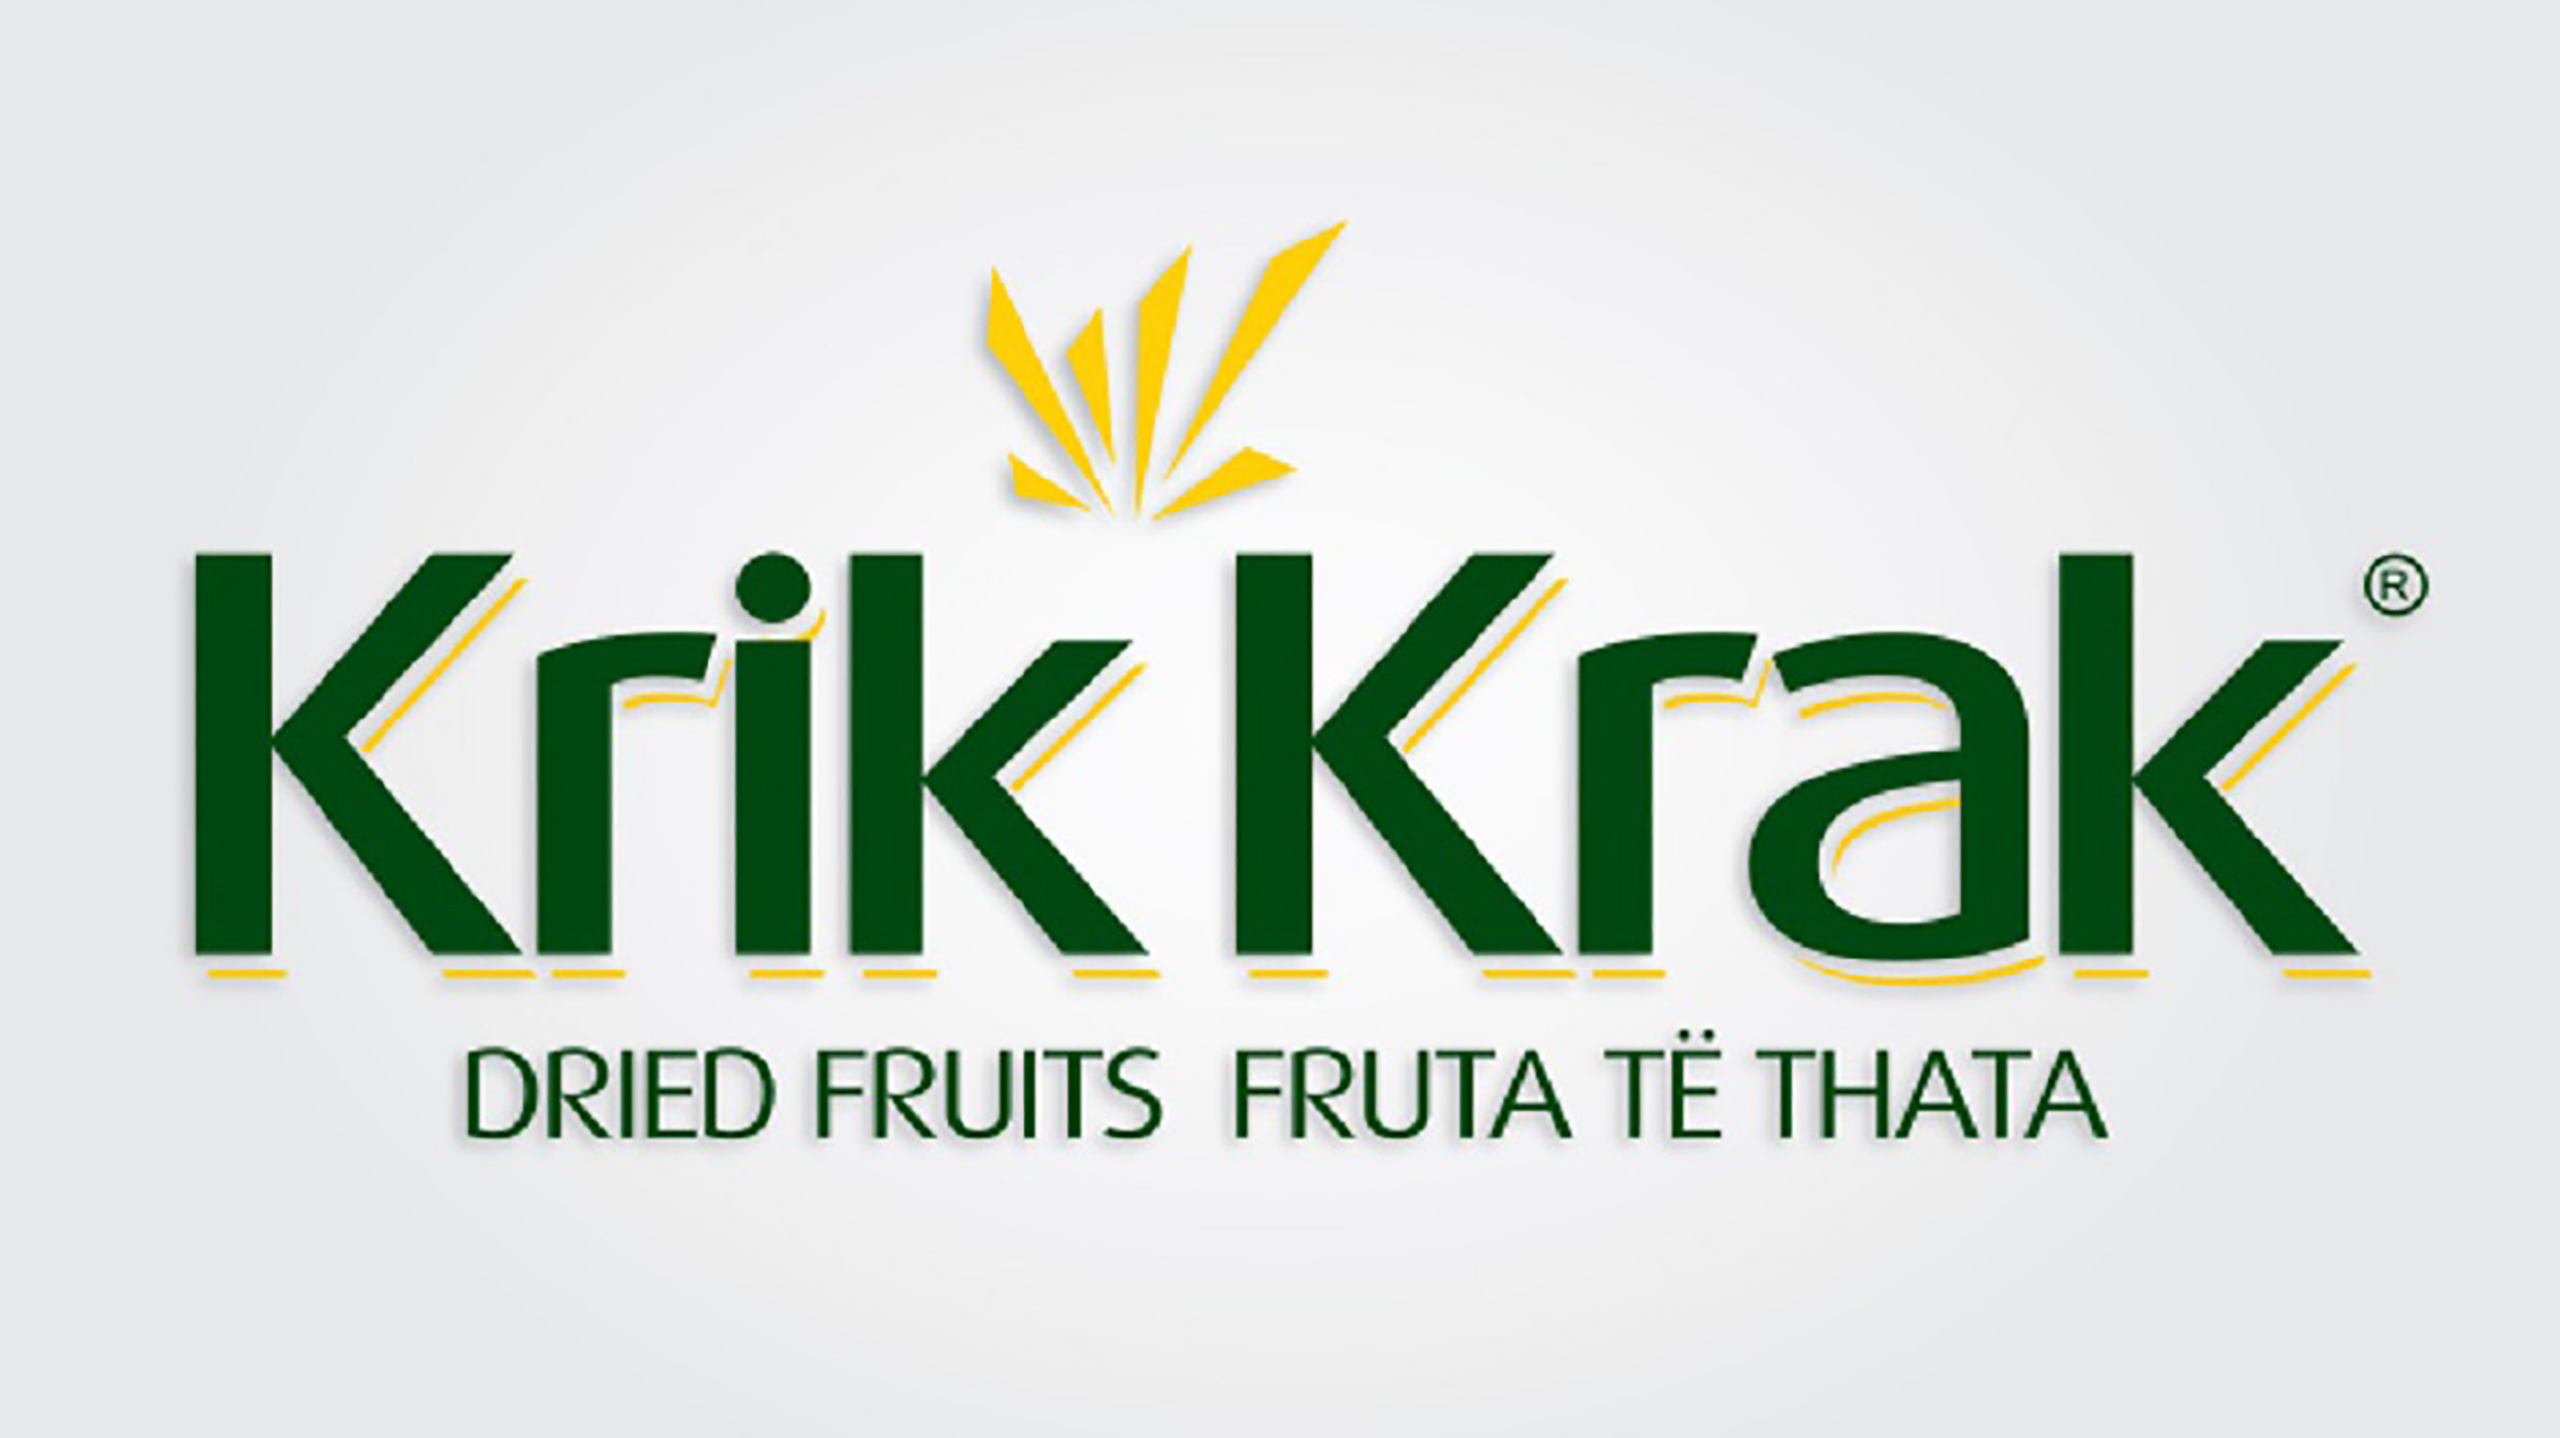 Krik Krak Launched A New Product Campaign Vatra Agency